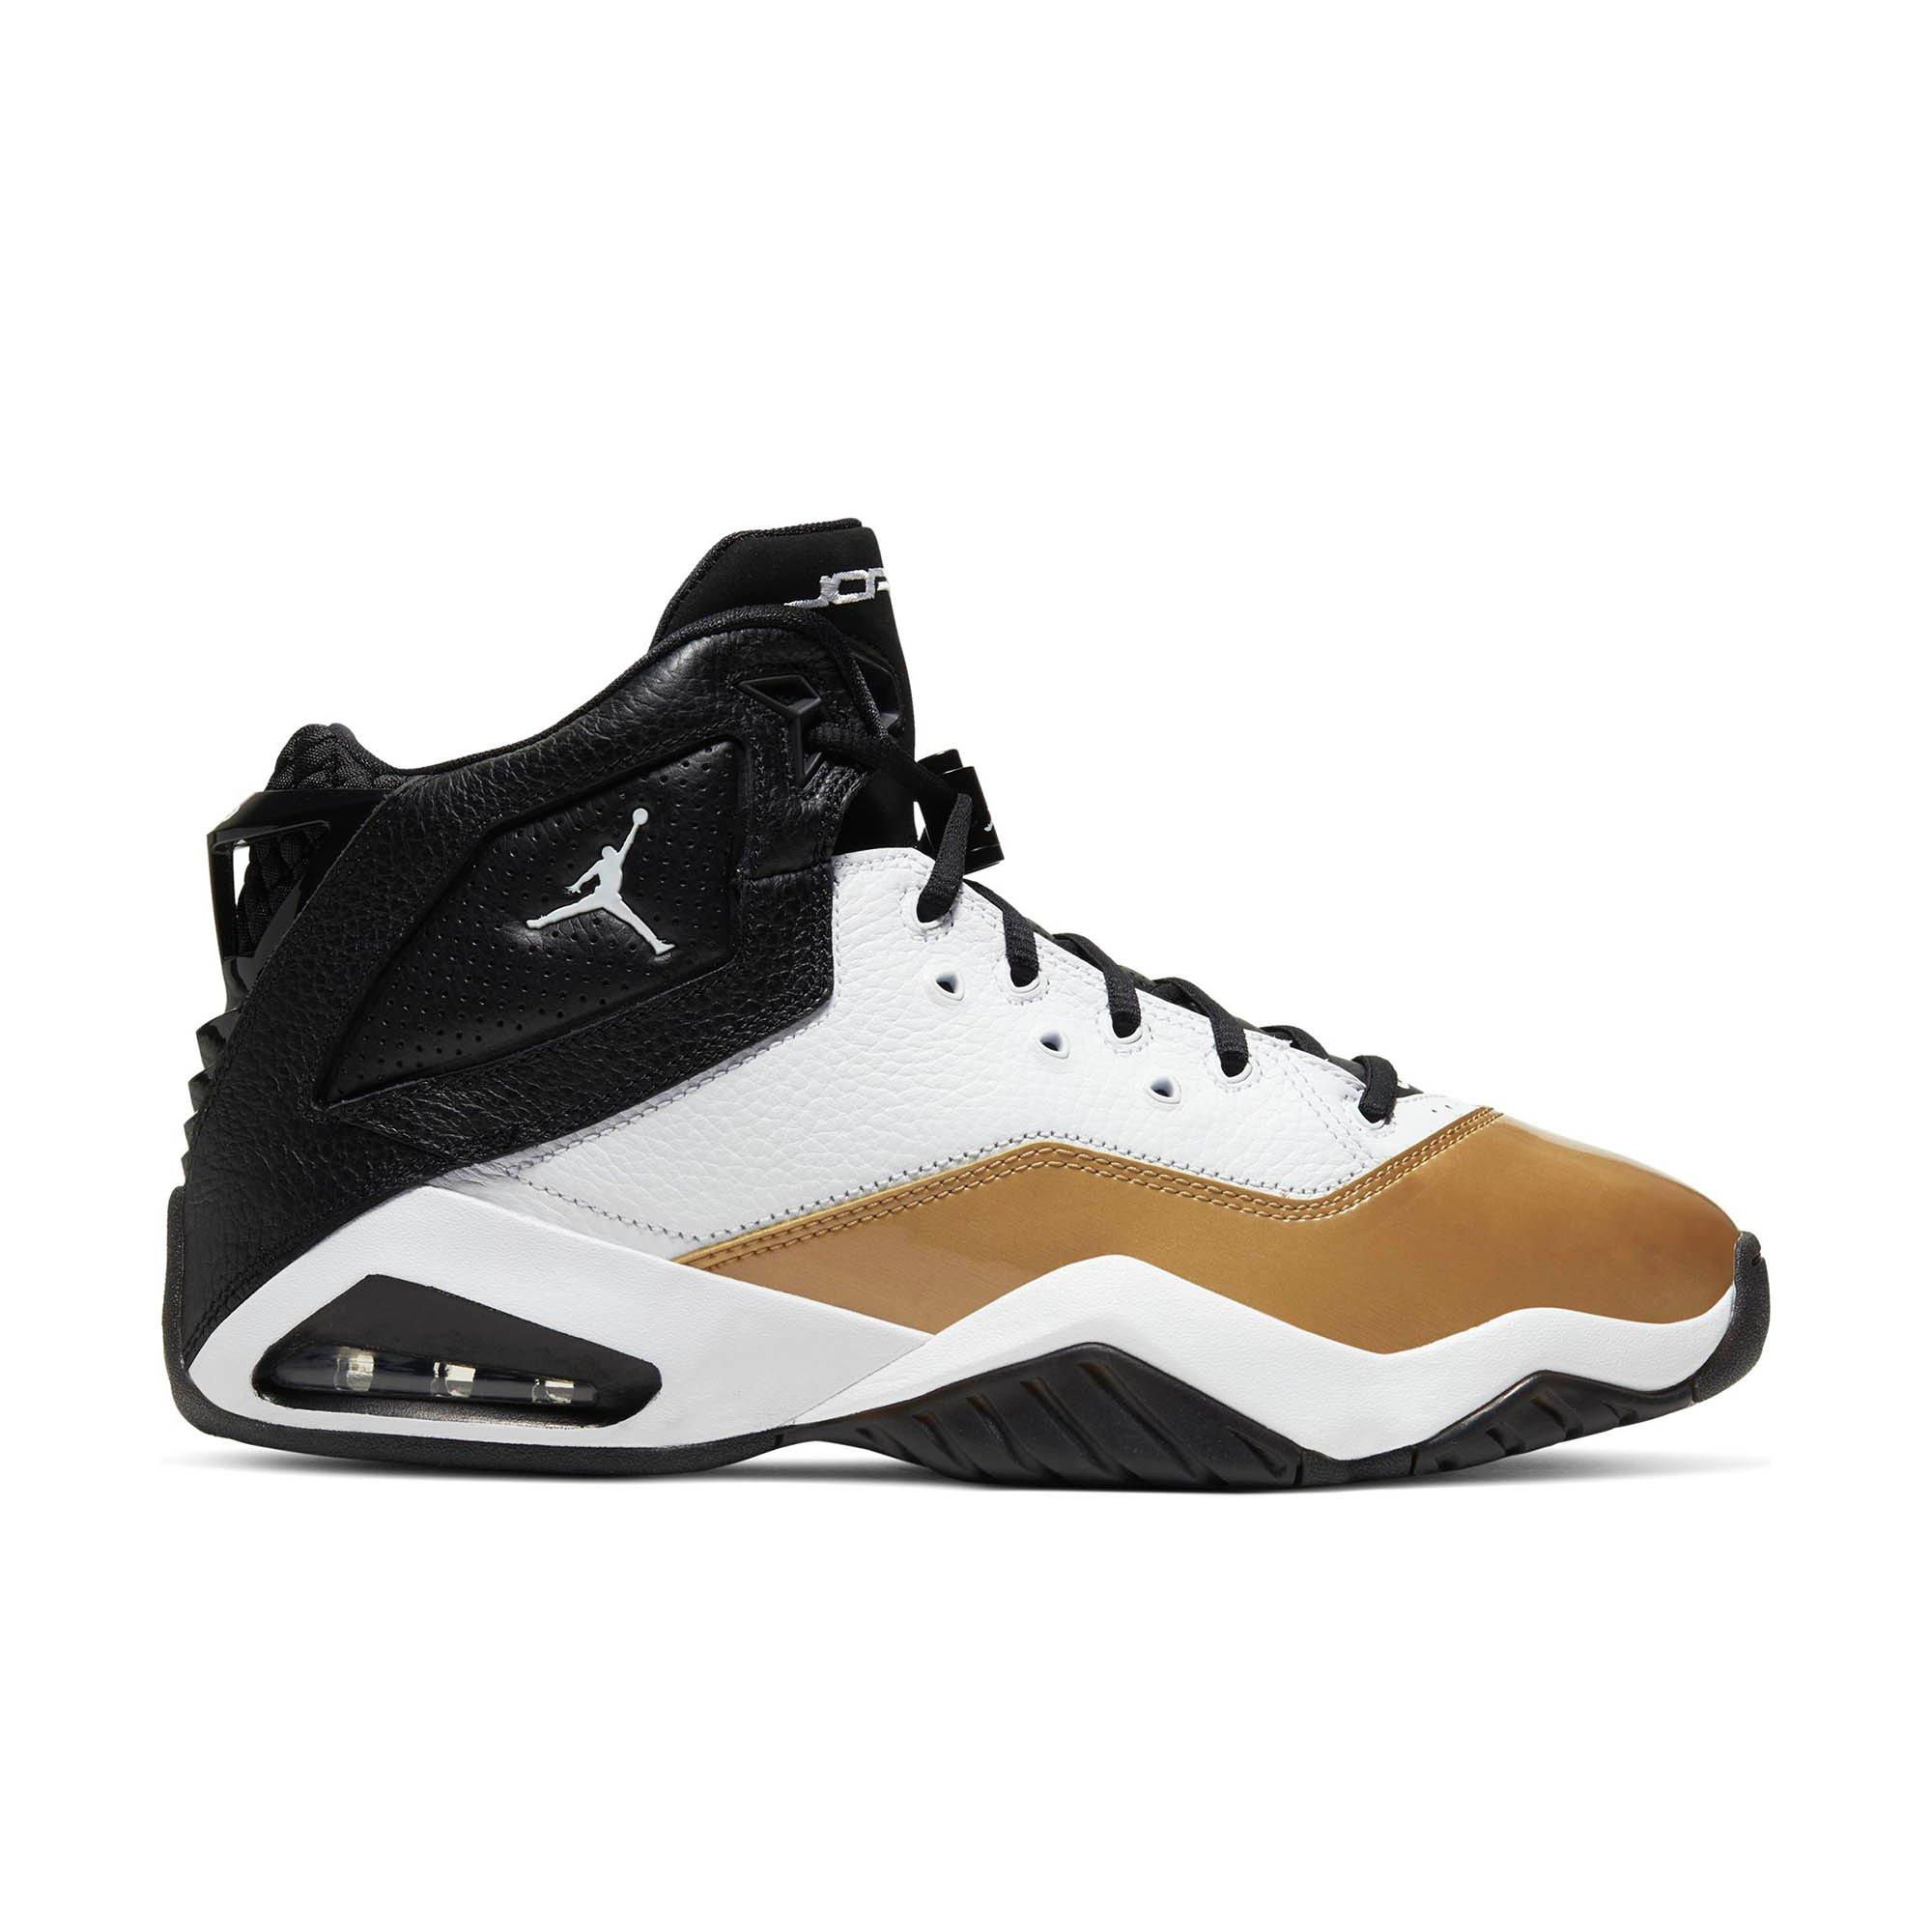 jordan shoes black white and gold